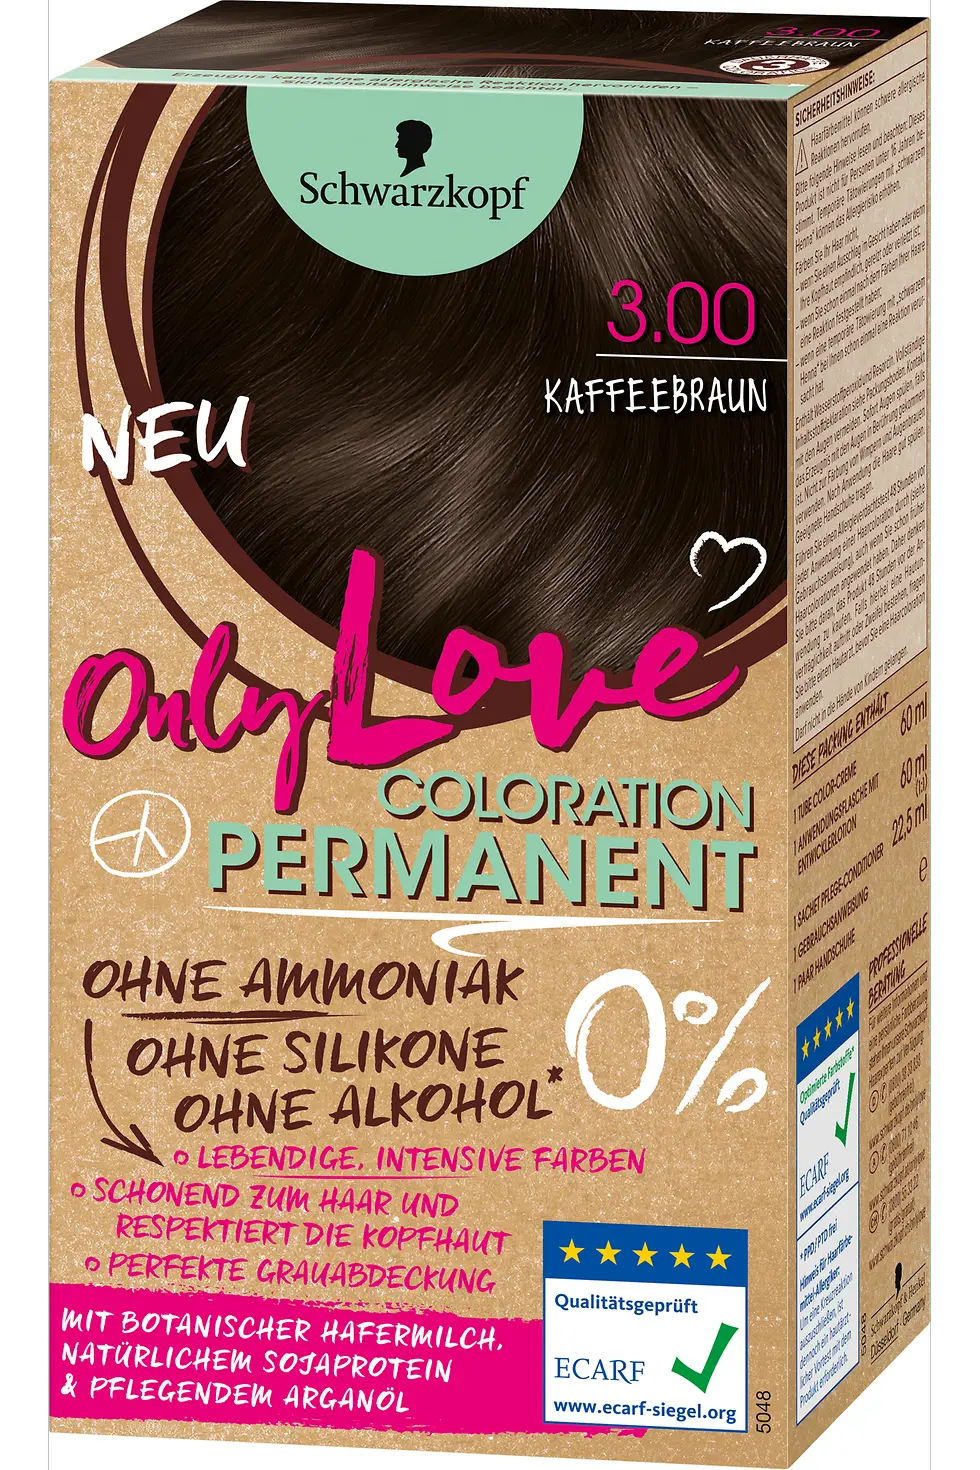 Only Love Kaffeebraun 3.00